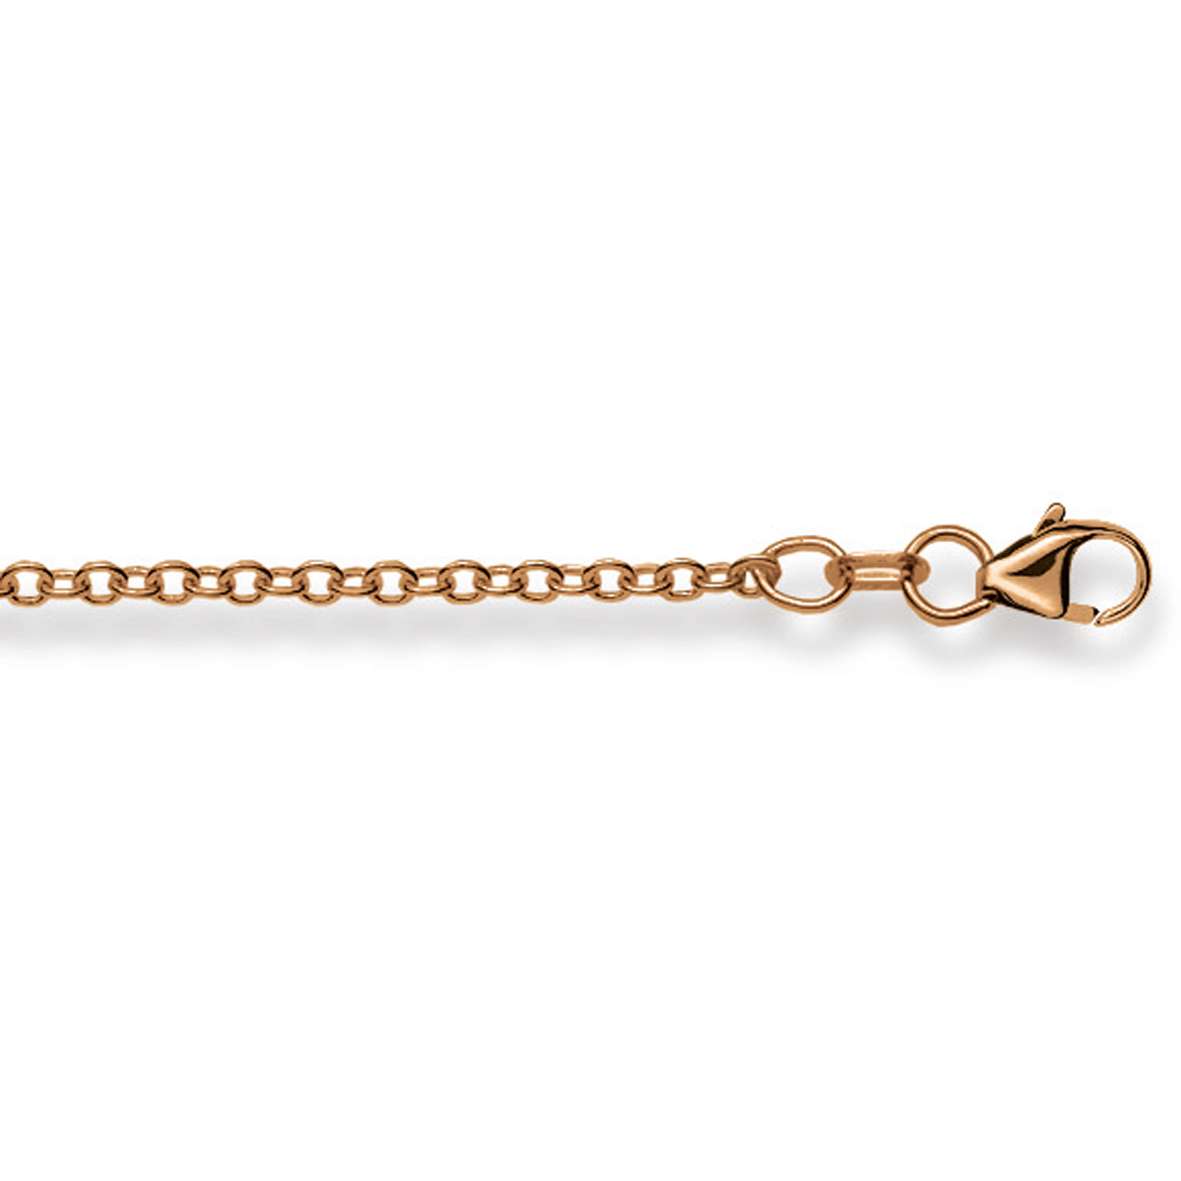 Necklace Pfalzer Gold Classics 45cm 2mm